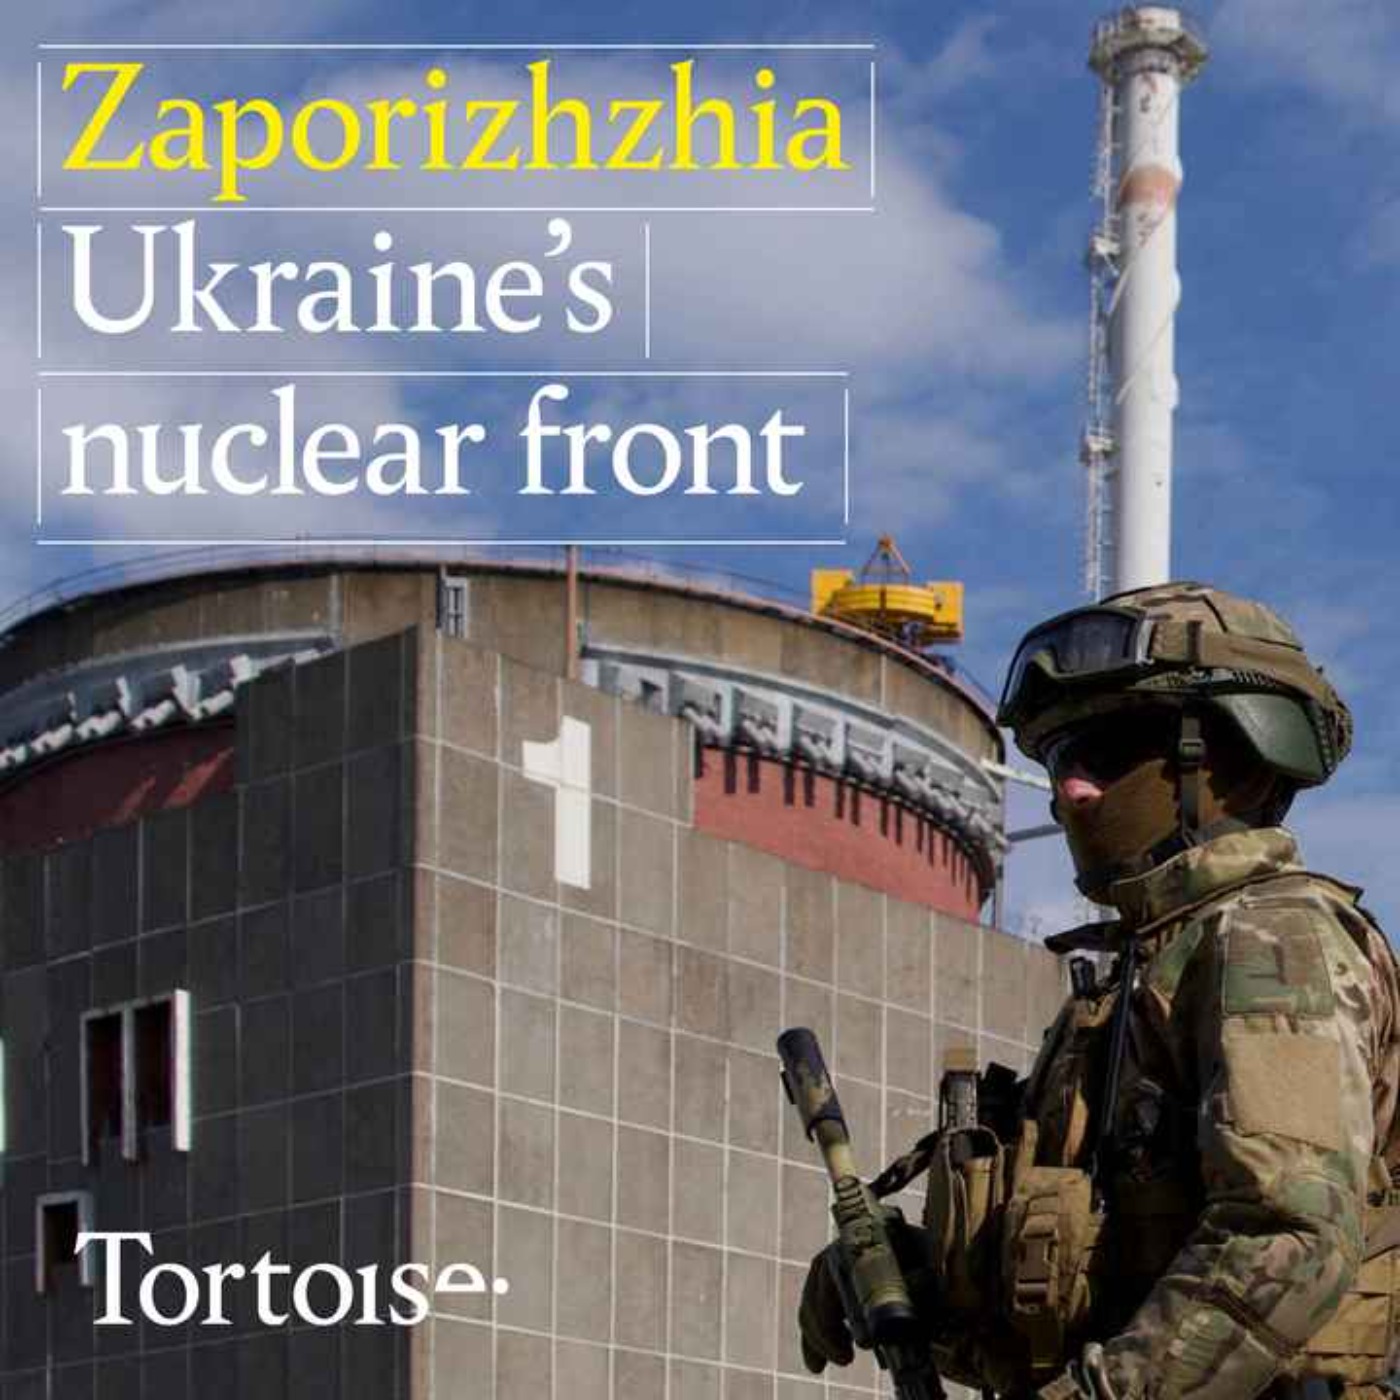 Zaporizhzhia: Ukraine’s nuclear front